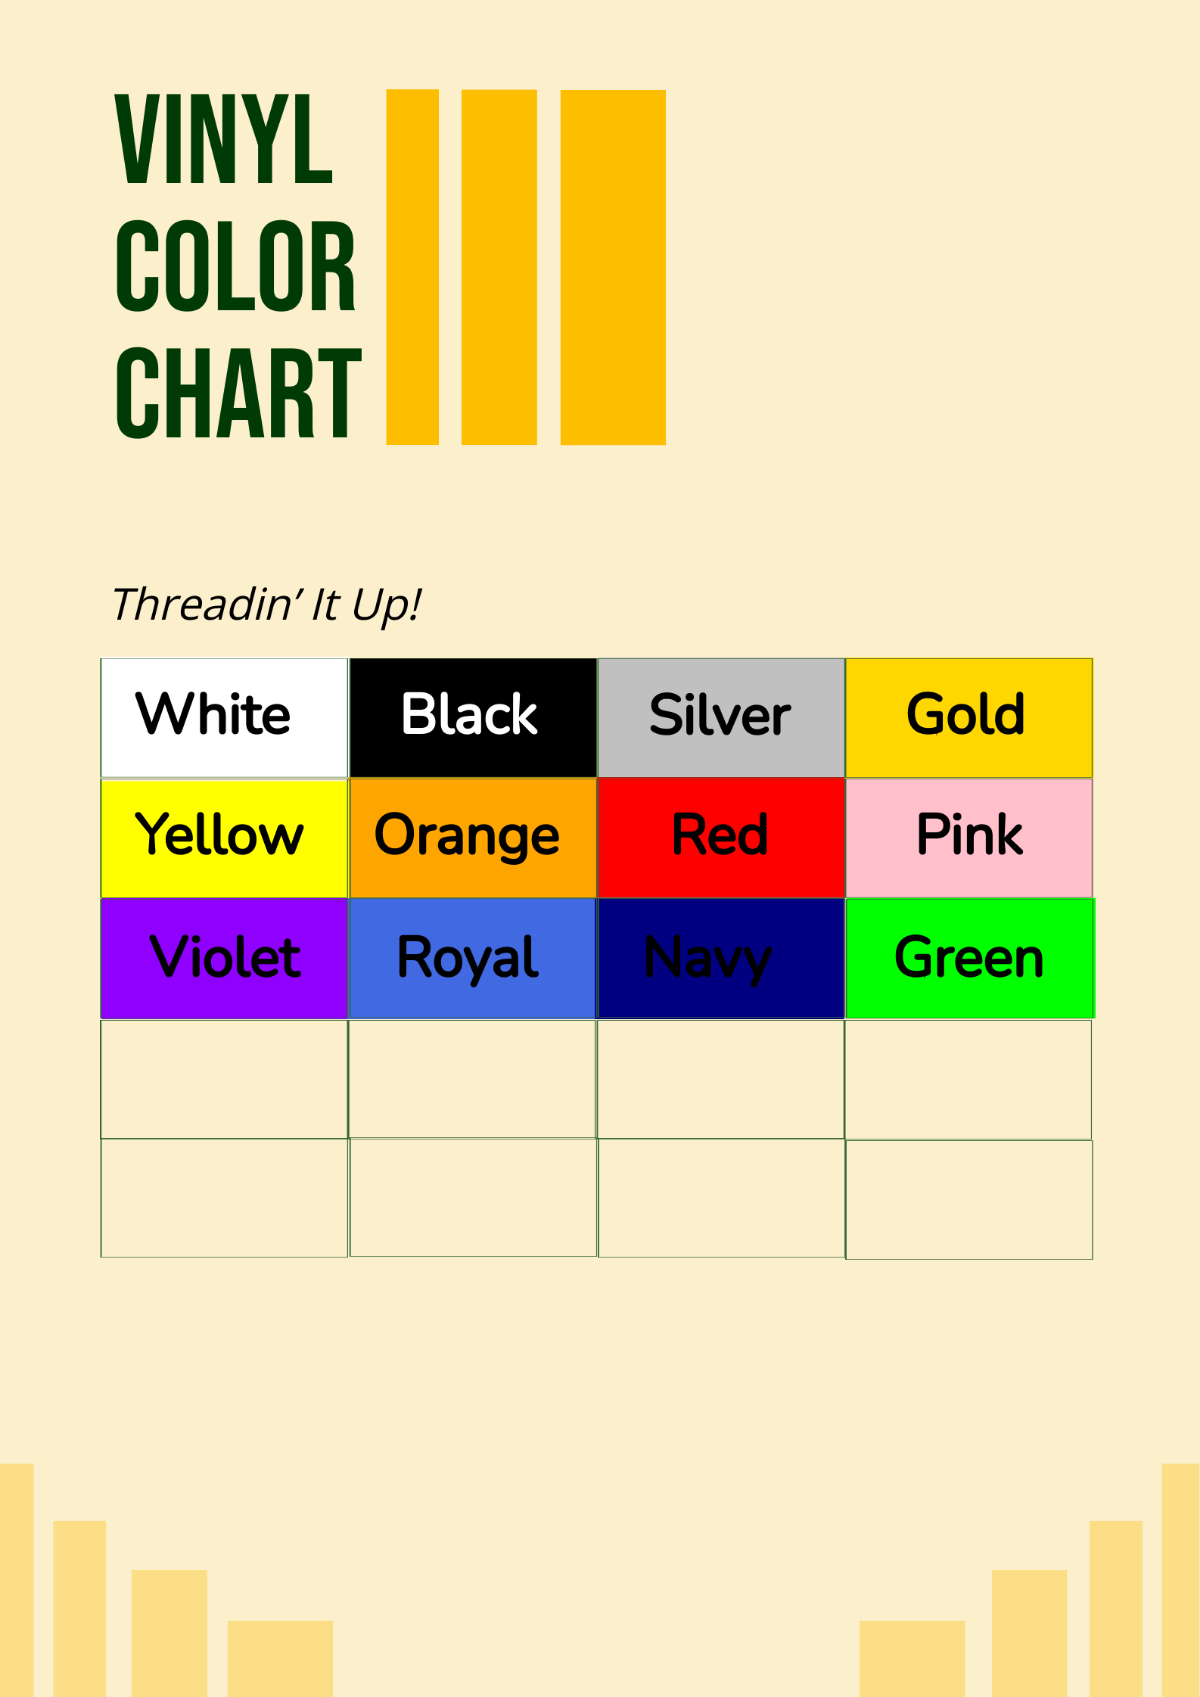 Vinyl color chart Template